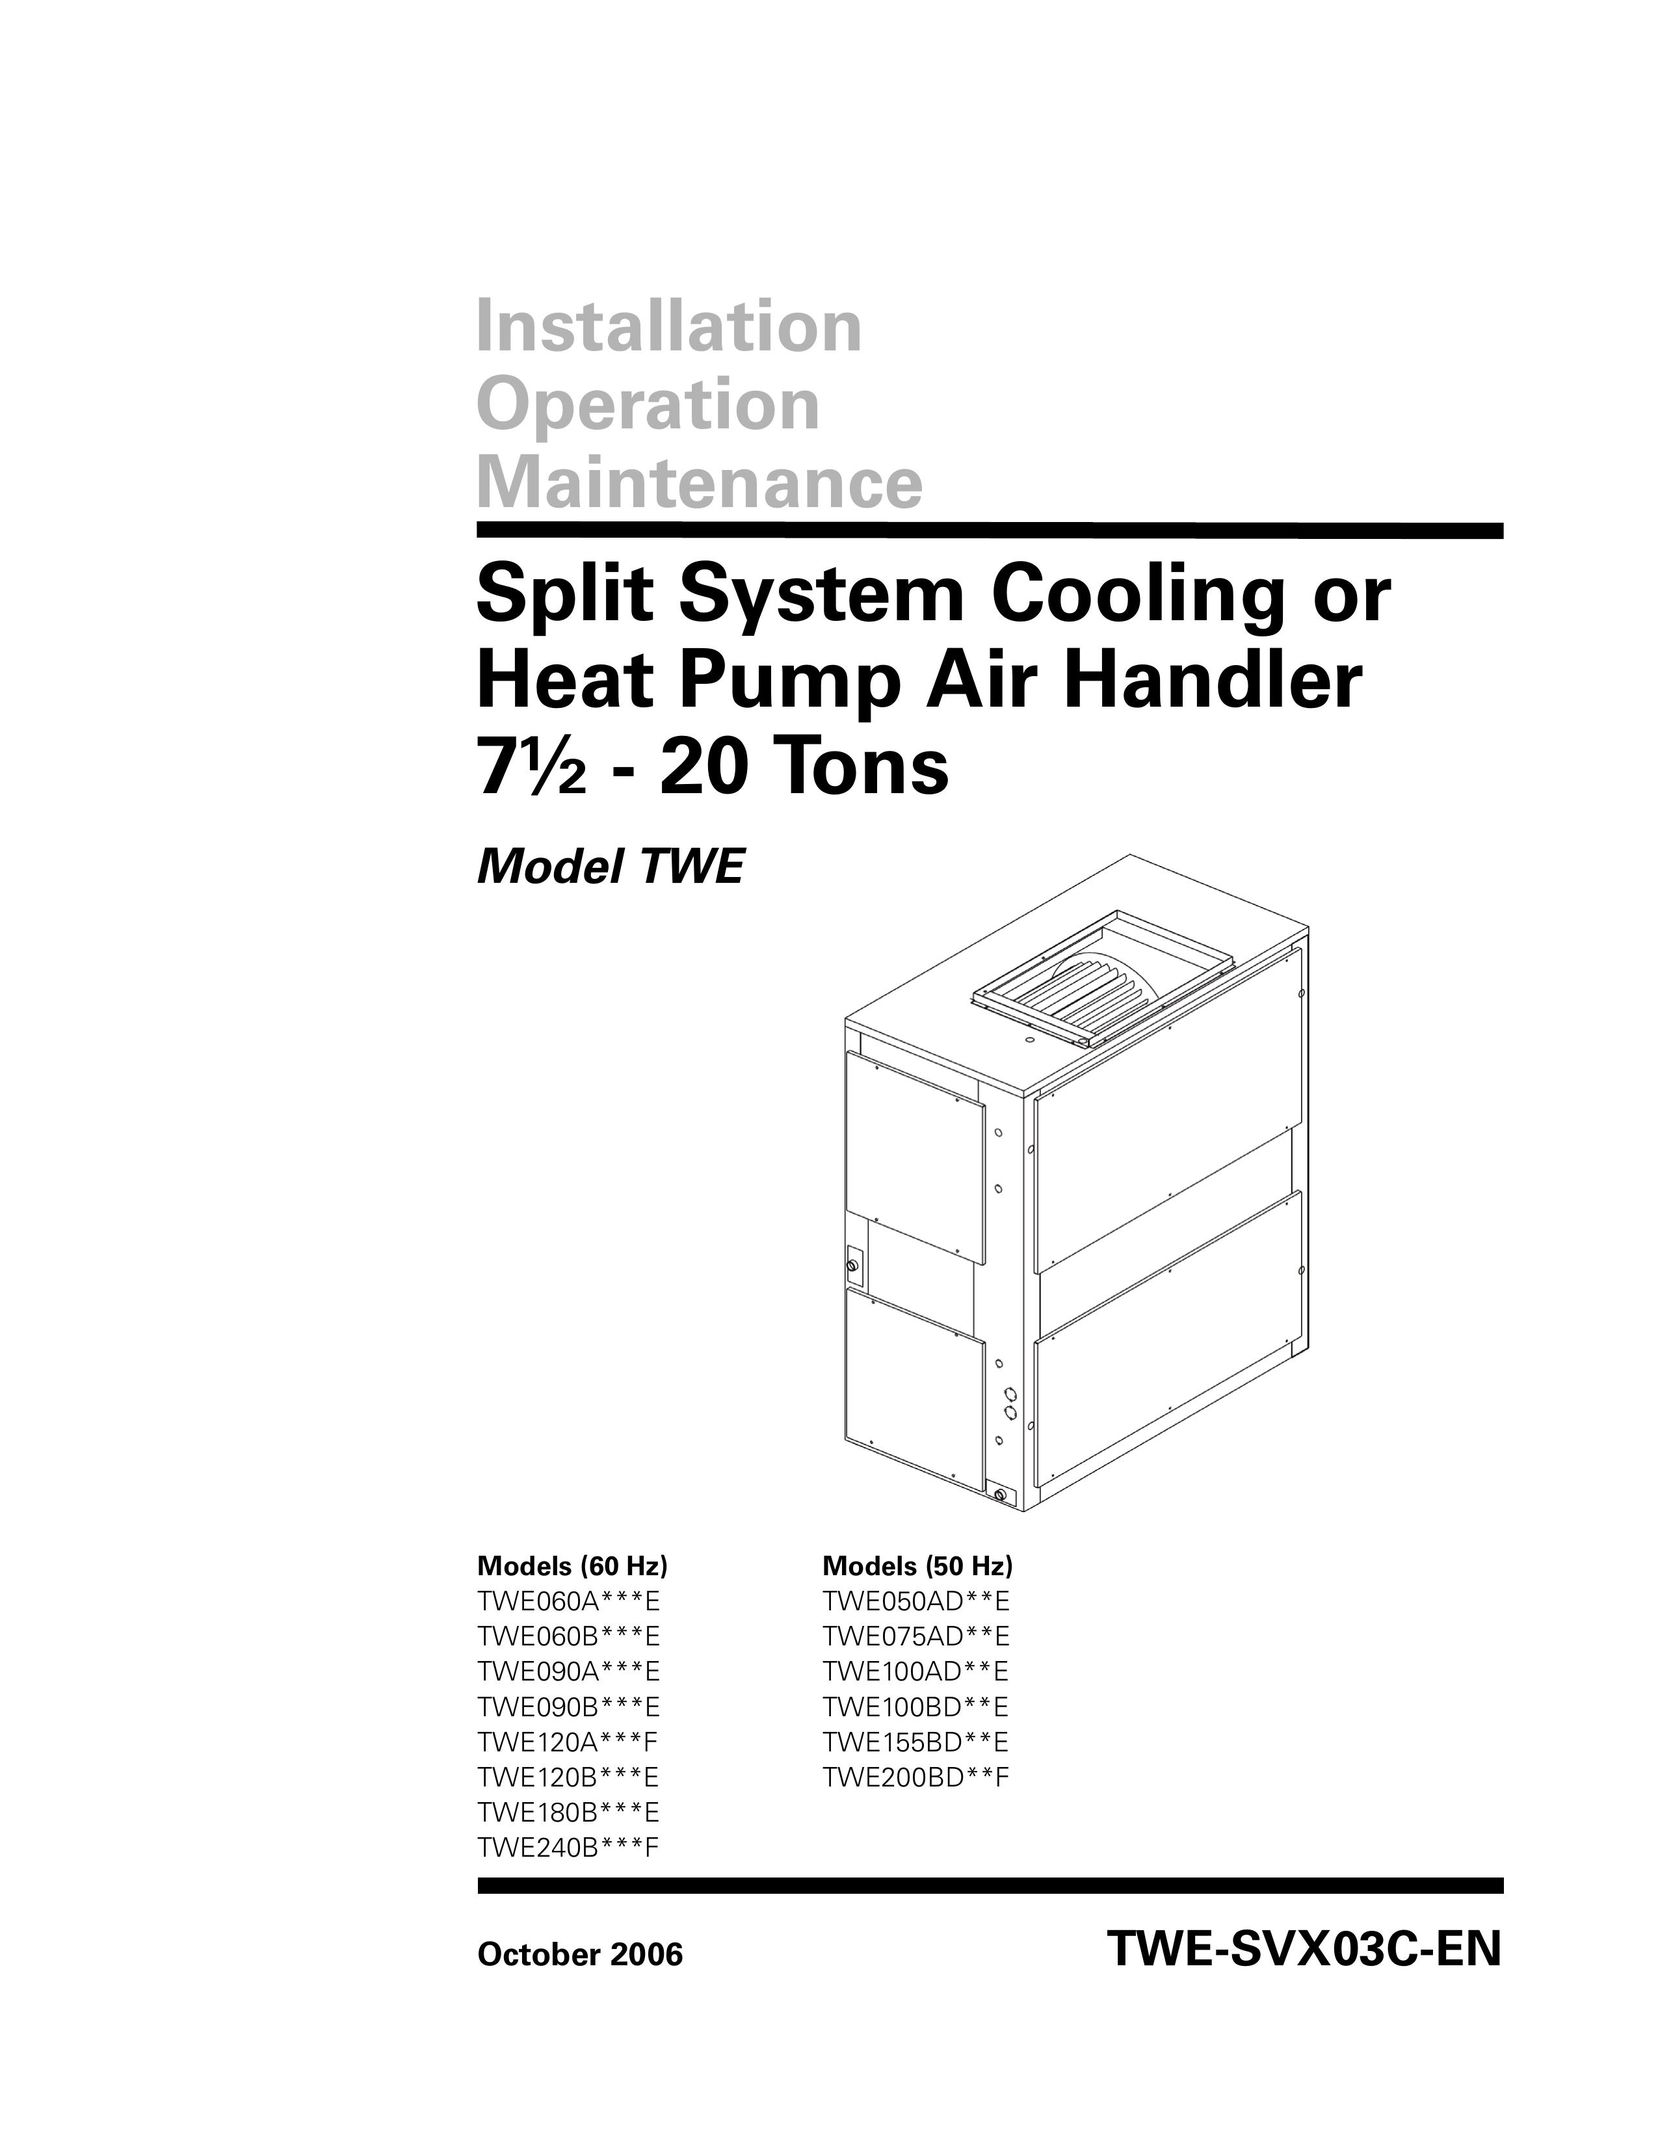 American Standard TWE155BD**E Heat Pump User Manual